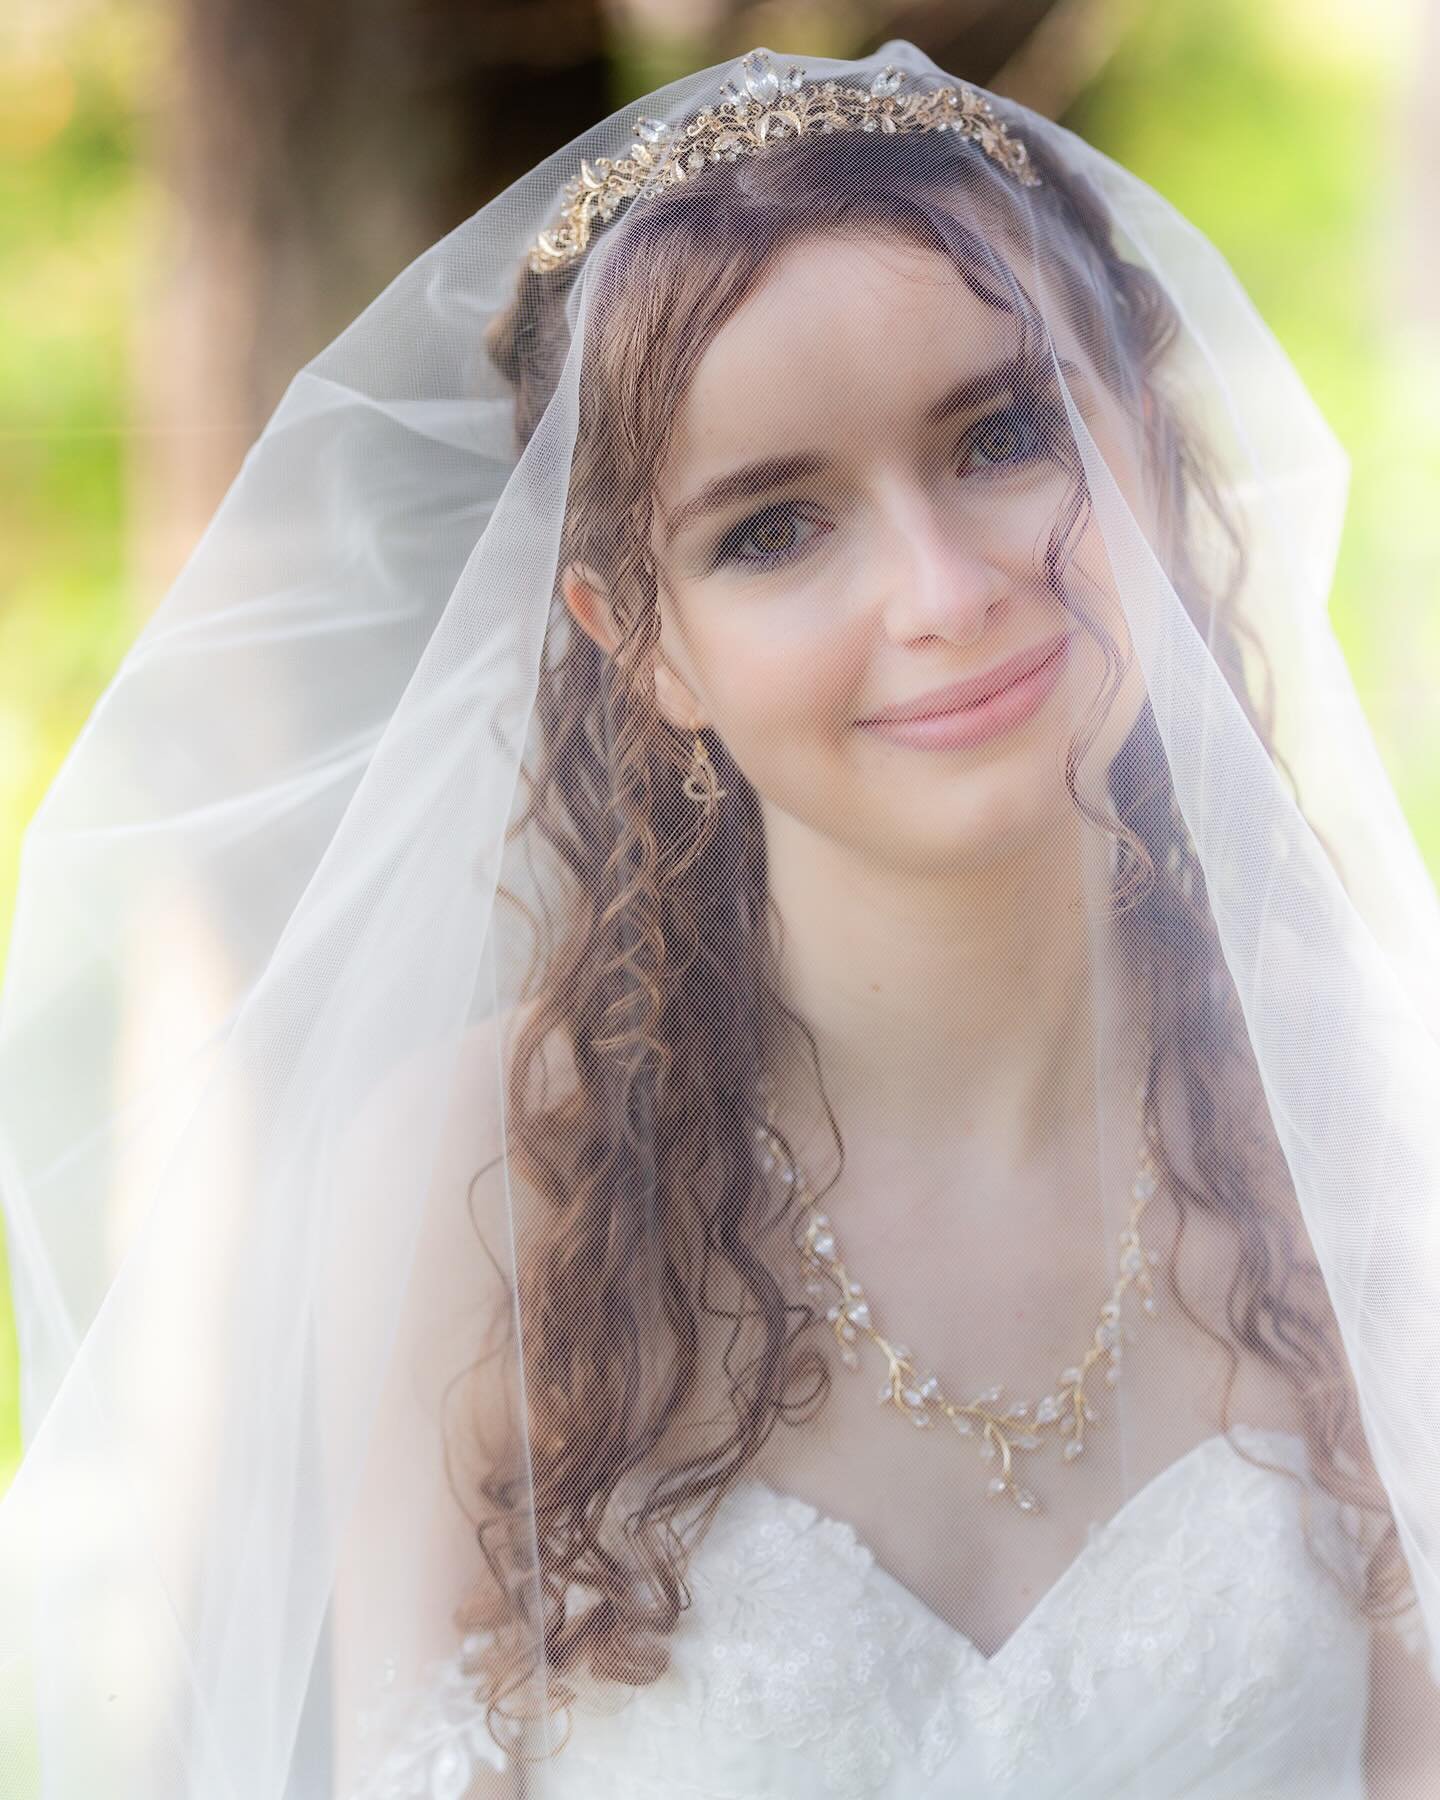 Absolutely angelic bride Jeanelle. 🥰  #weddingseason #brideveil #beautifulbride #bcbride #canadianweddingphotographer #westcoastweddings